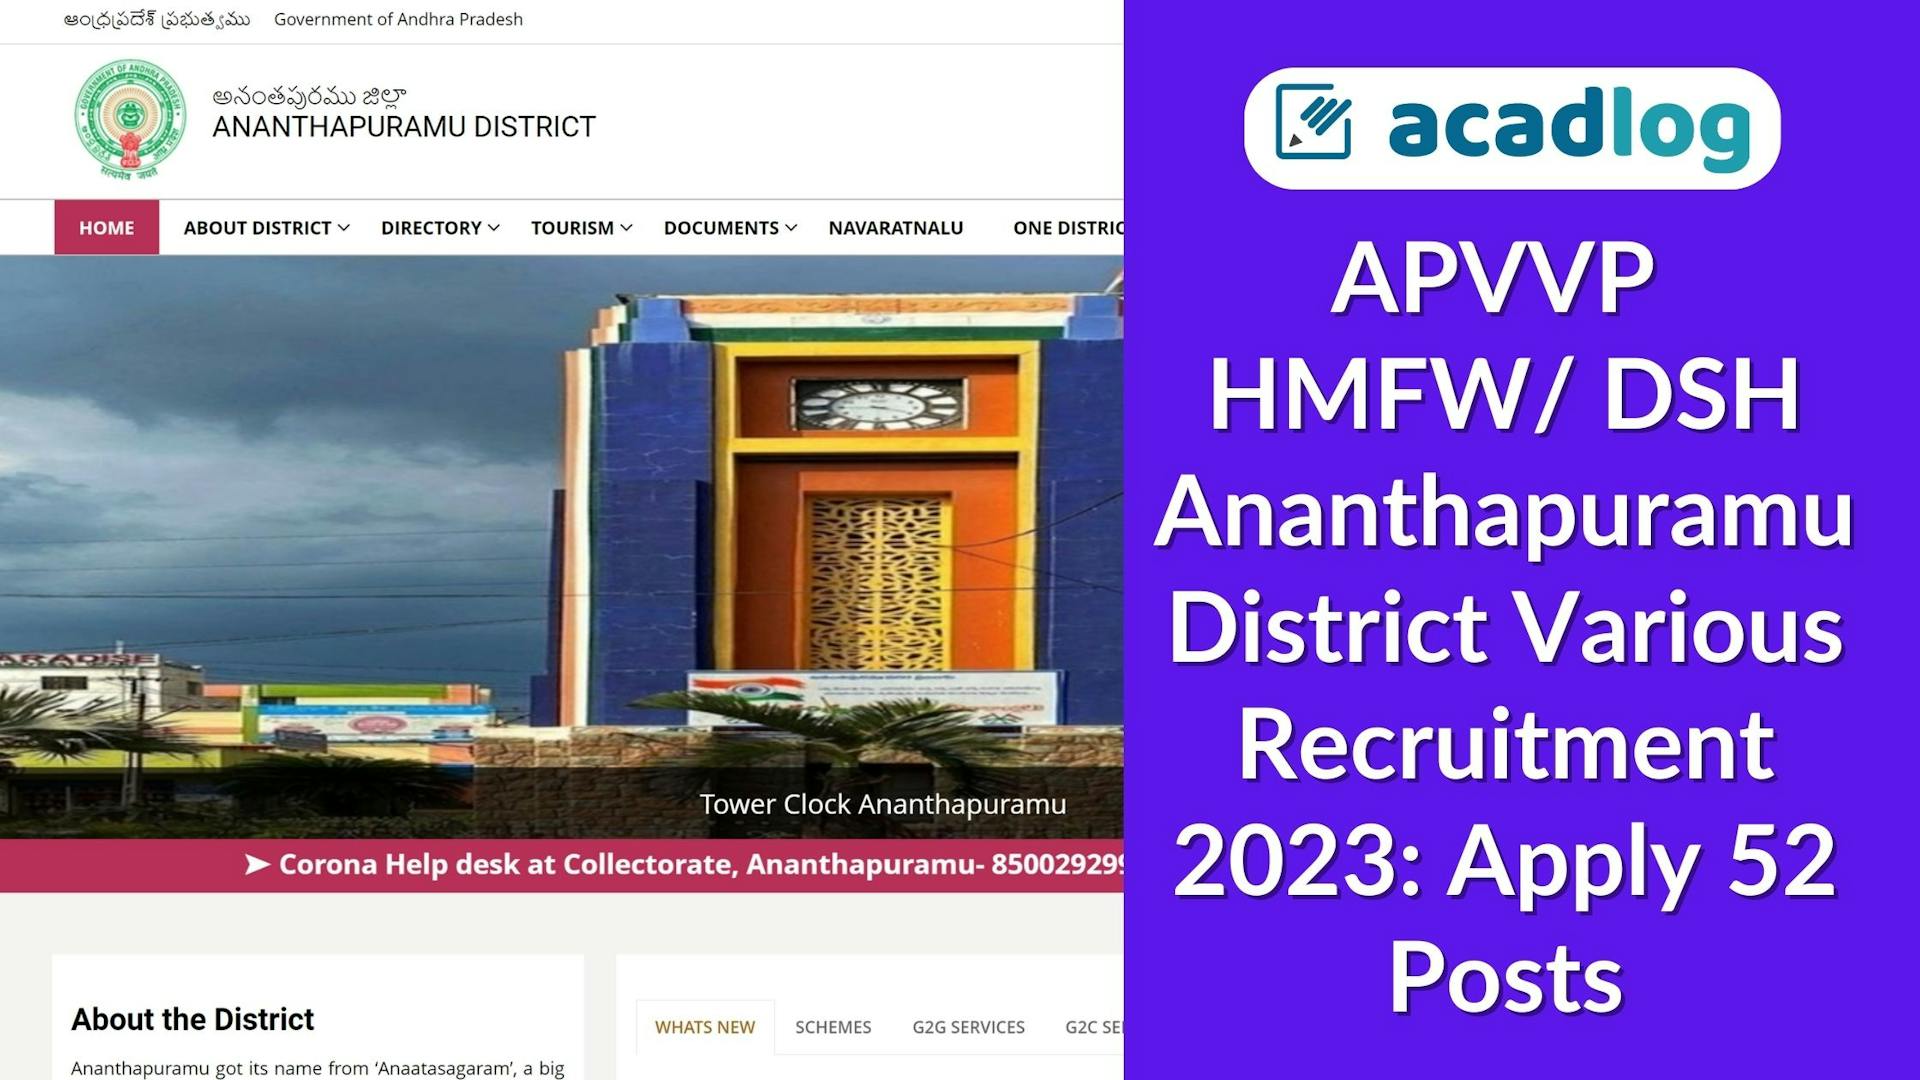 APVVP HMFW/ DSH Ananthapuramu District Various Recruitment 2023: Apply 52 Posts